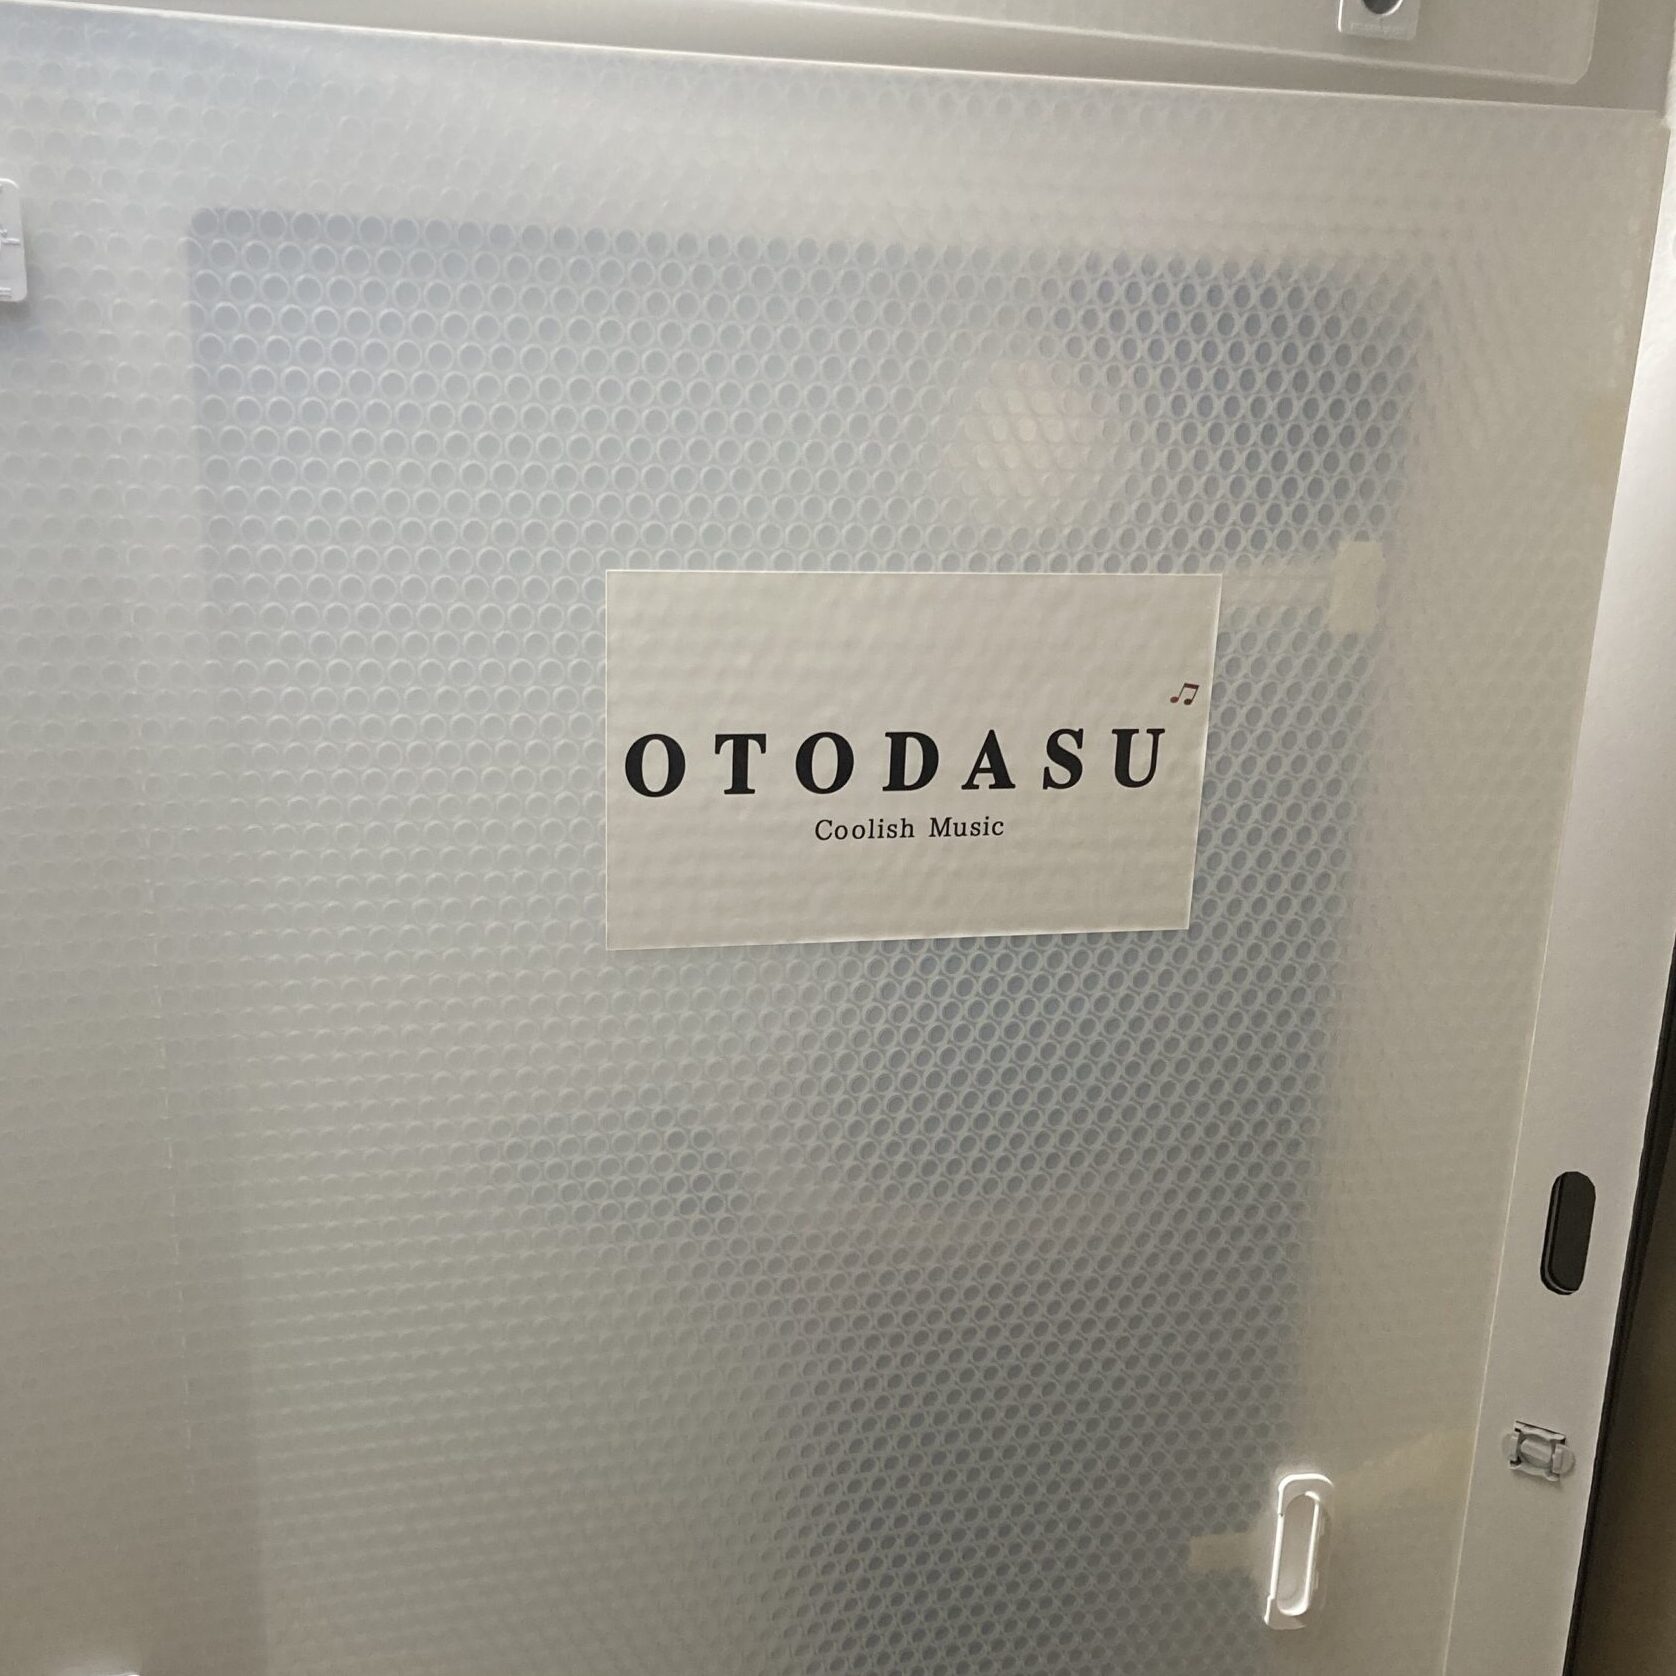 OTODASU】簡易防音室を買って1年経った話【レビュー】｜りってんの書き綴り